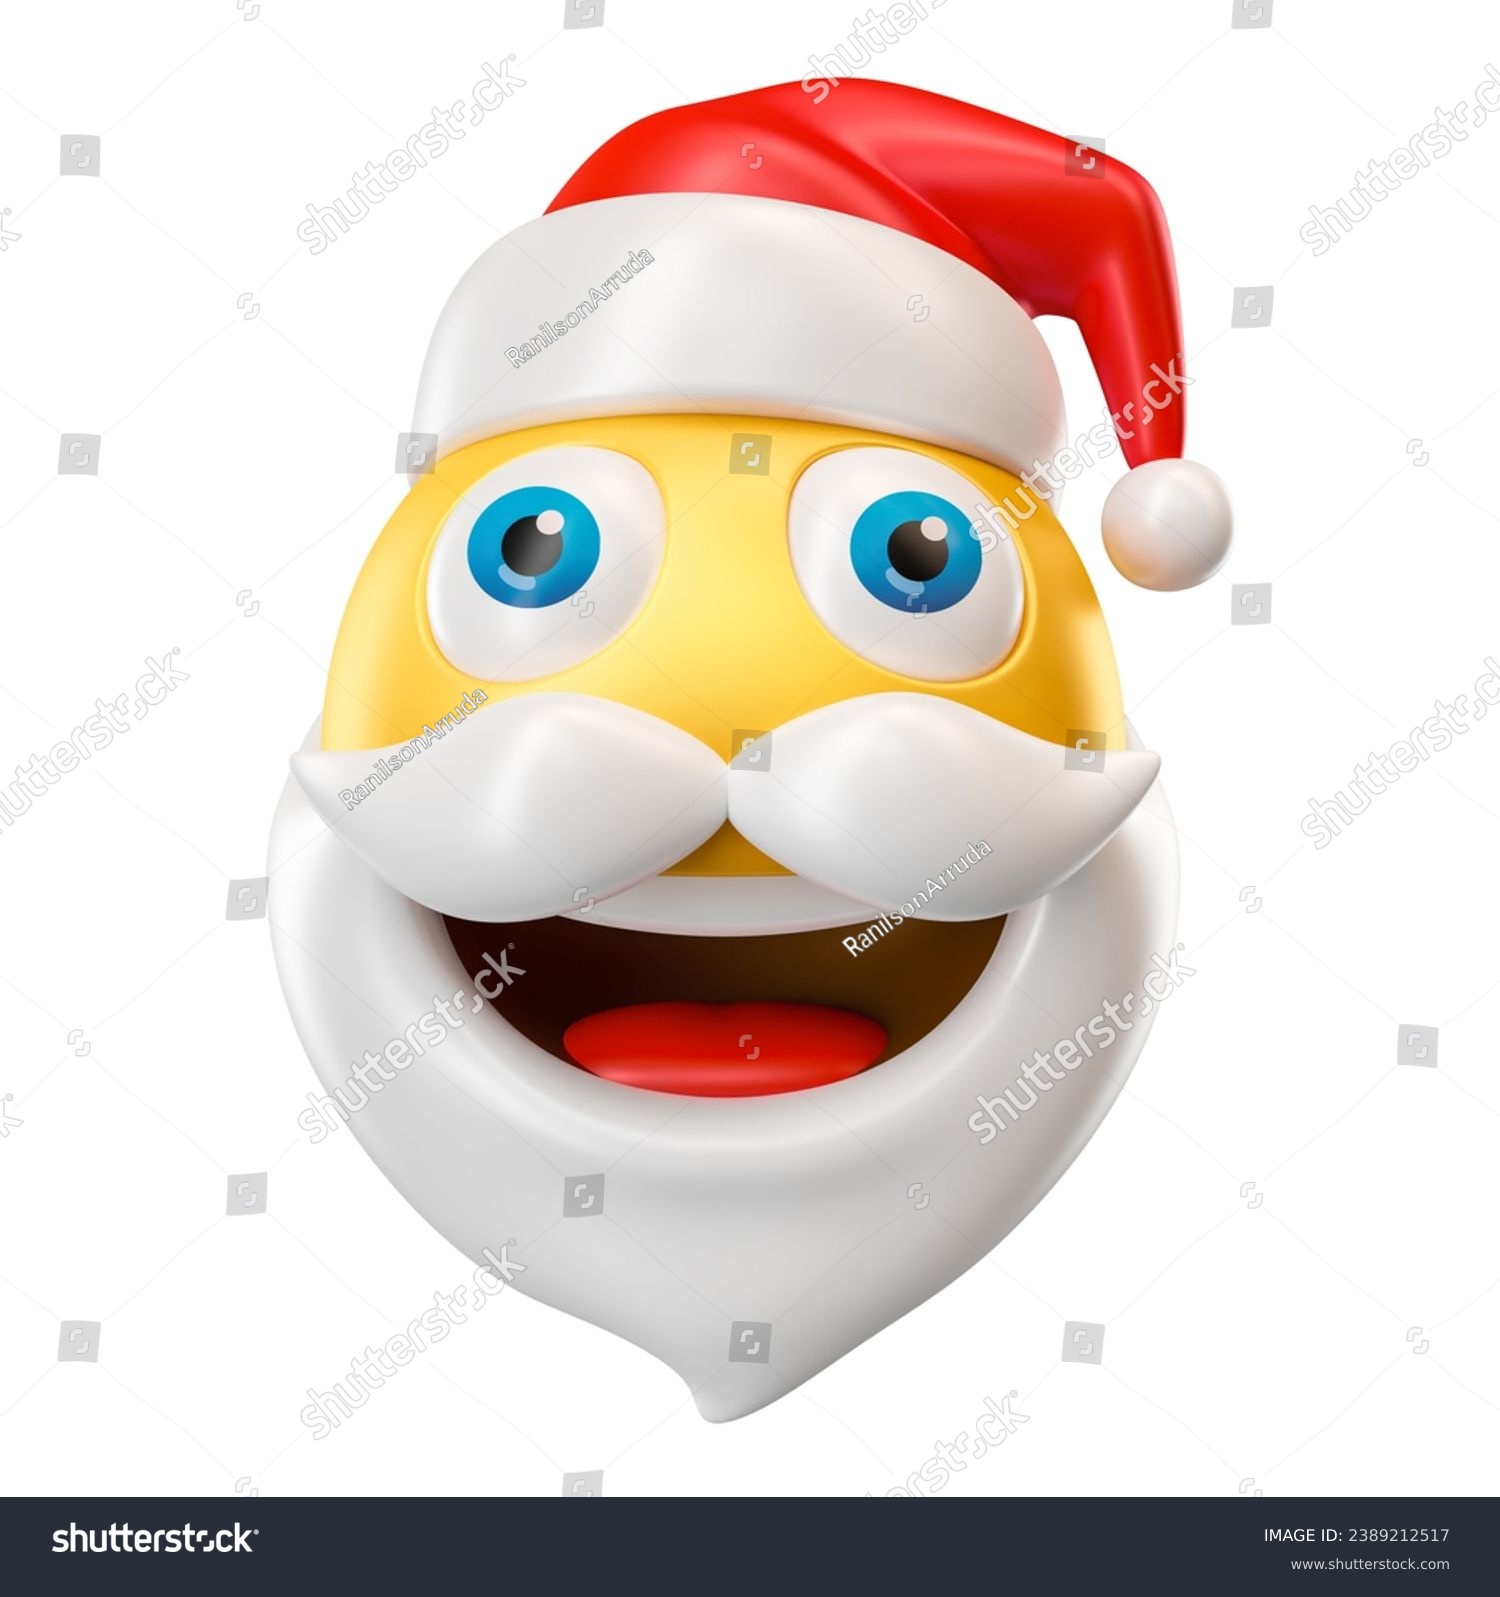 Santa claus emoji images stock photos d objects vectors